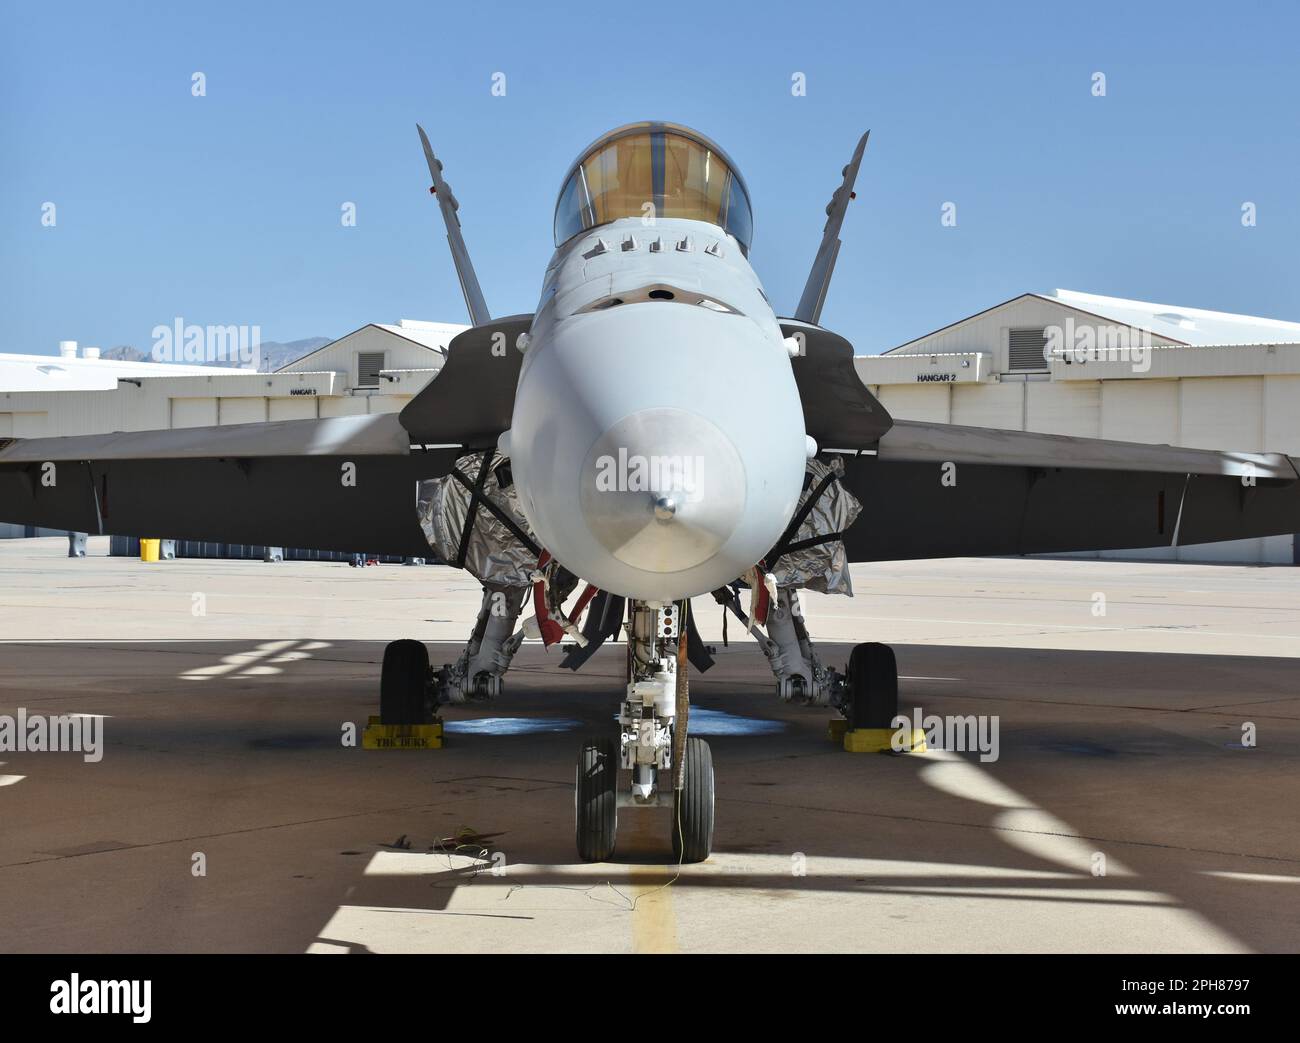 A U.S. Navy F/A-18 Super Hornet fighter jet parked in a hangar. Stock Photo